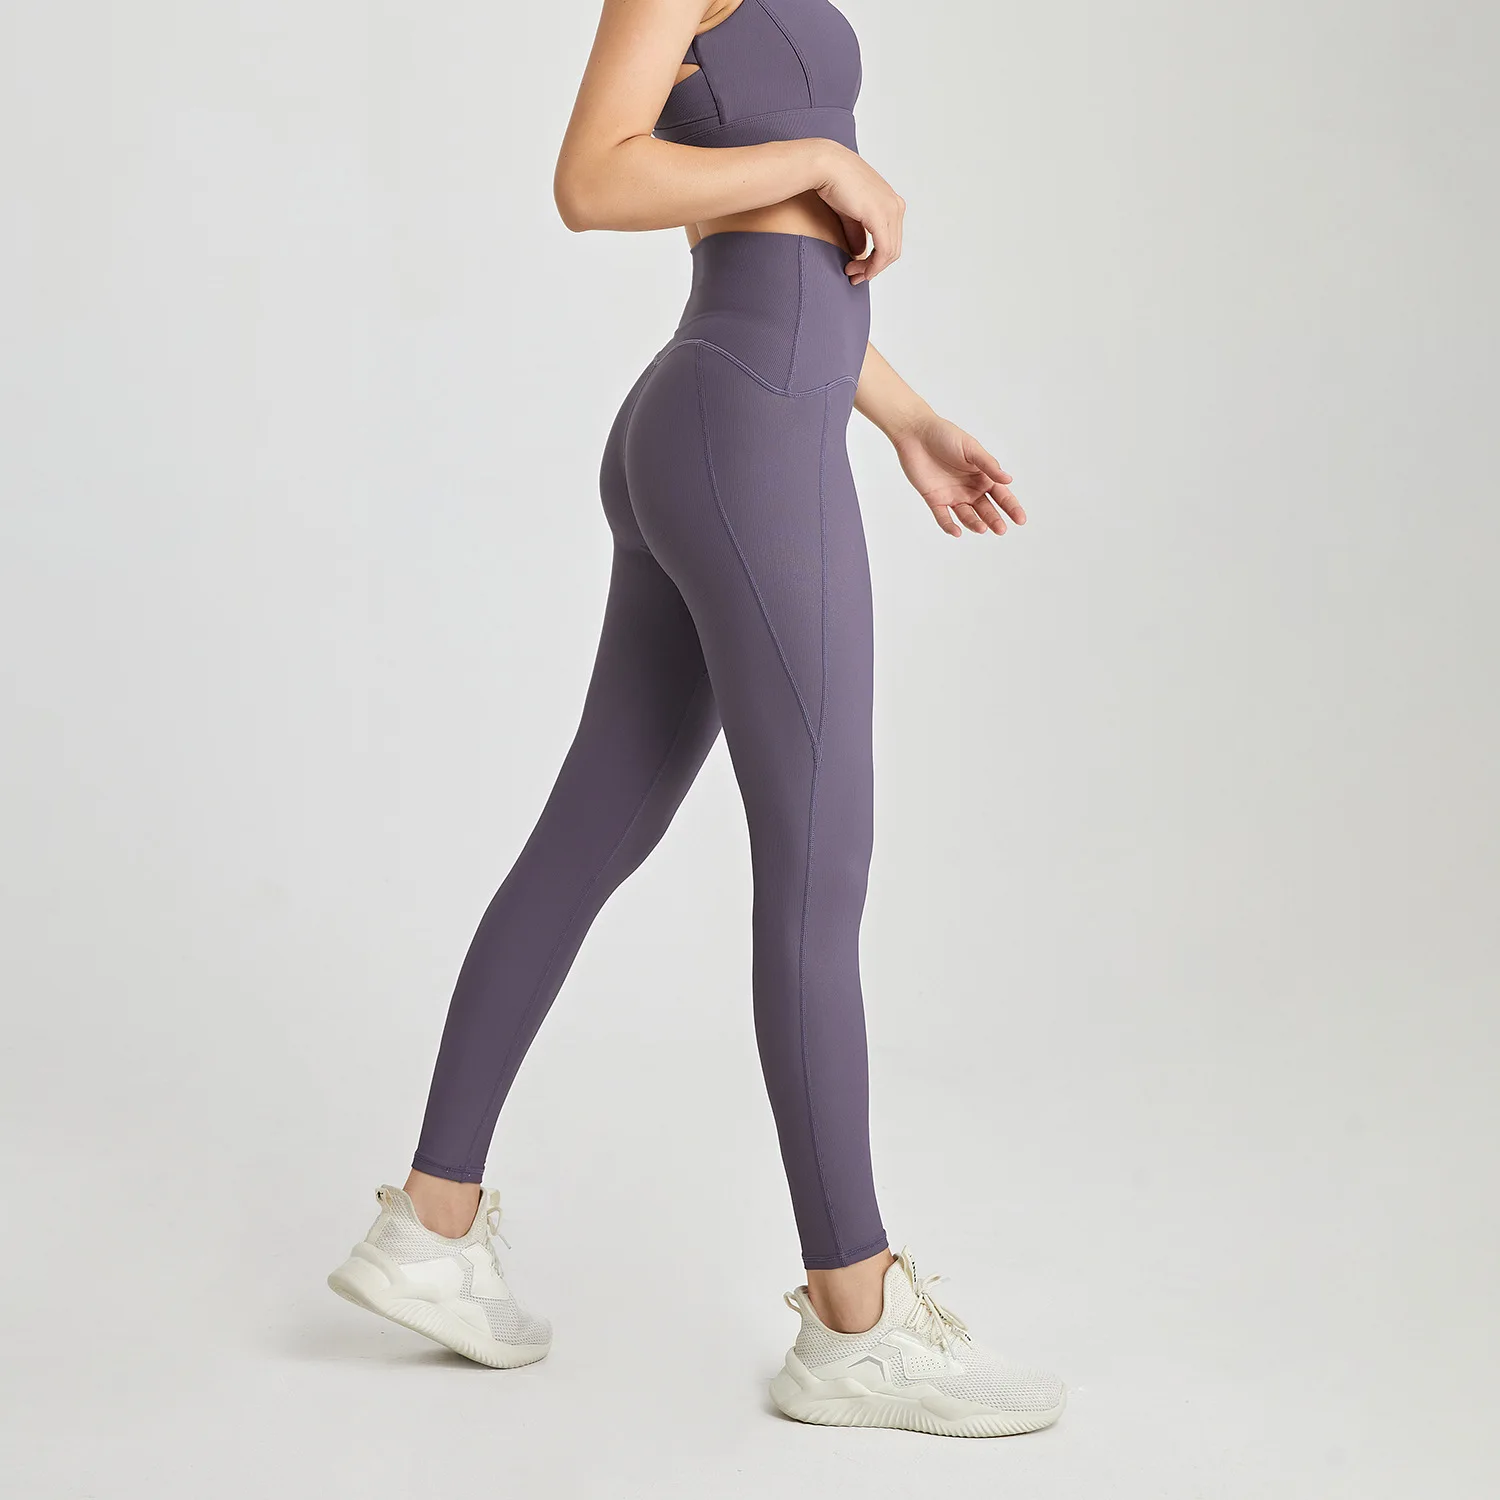 High Waist Yoga Pants Women's Workout Capris Tummy Control Gym Sports  Running Training Capri Leggings - AliExpress